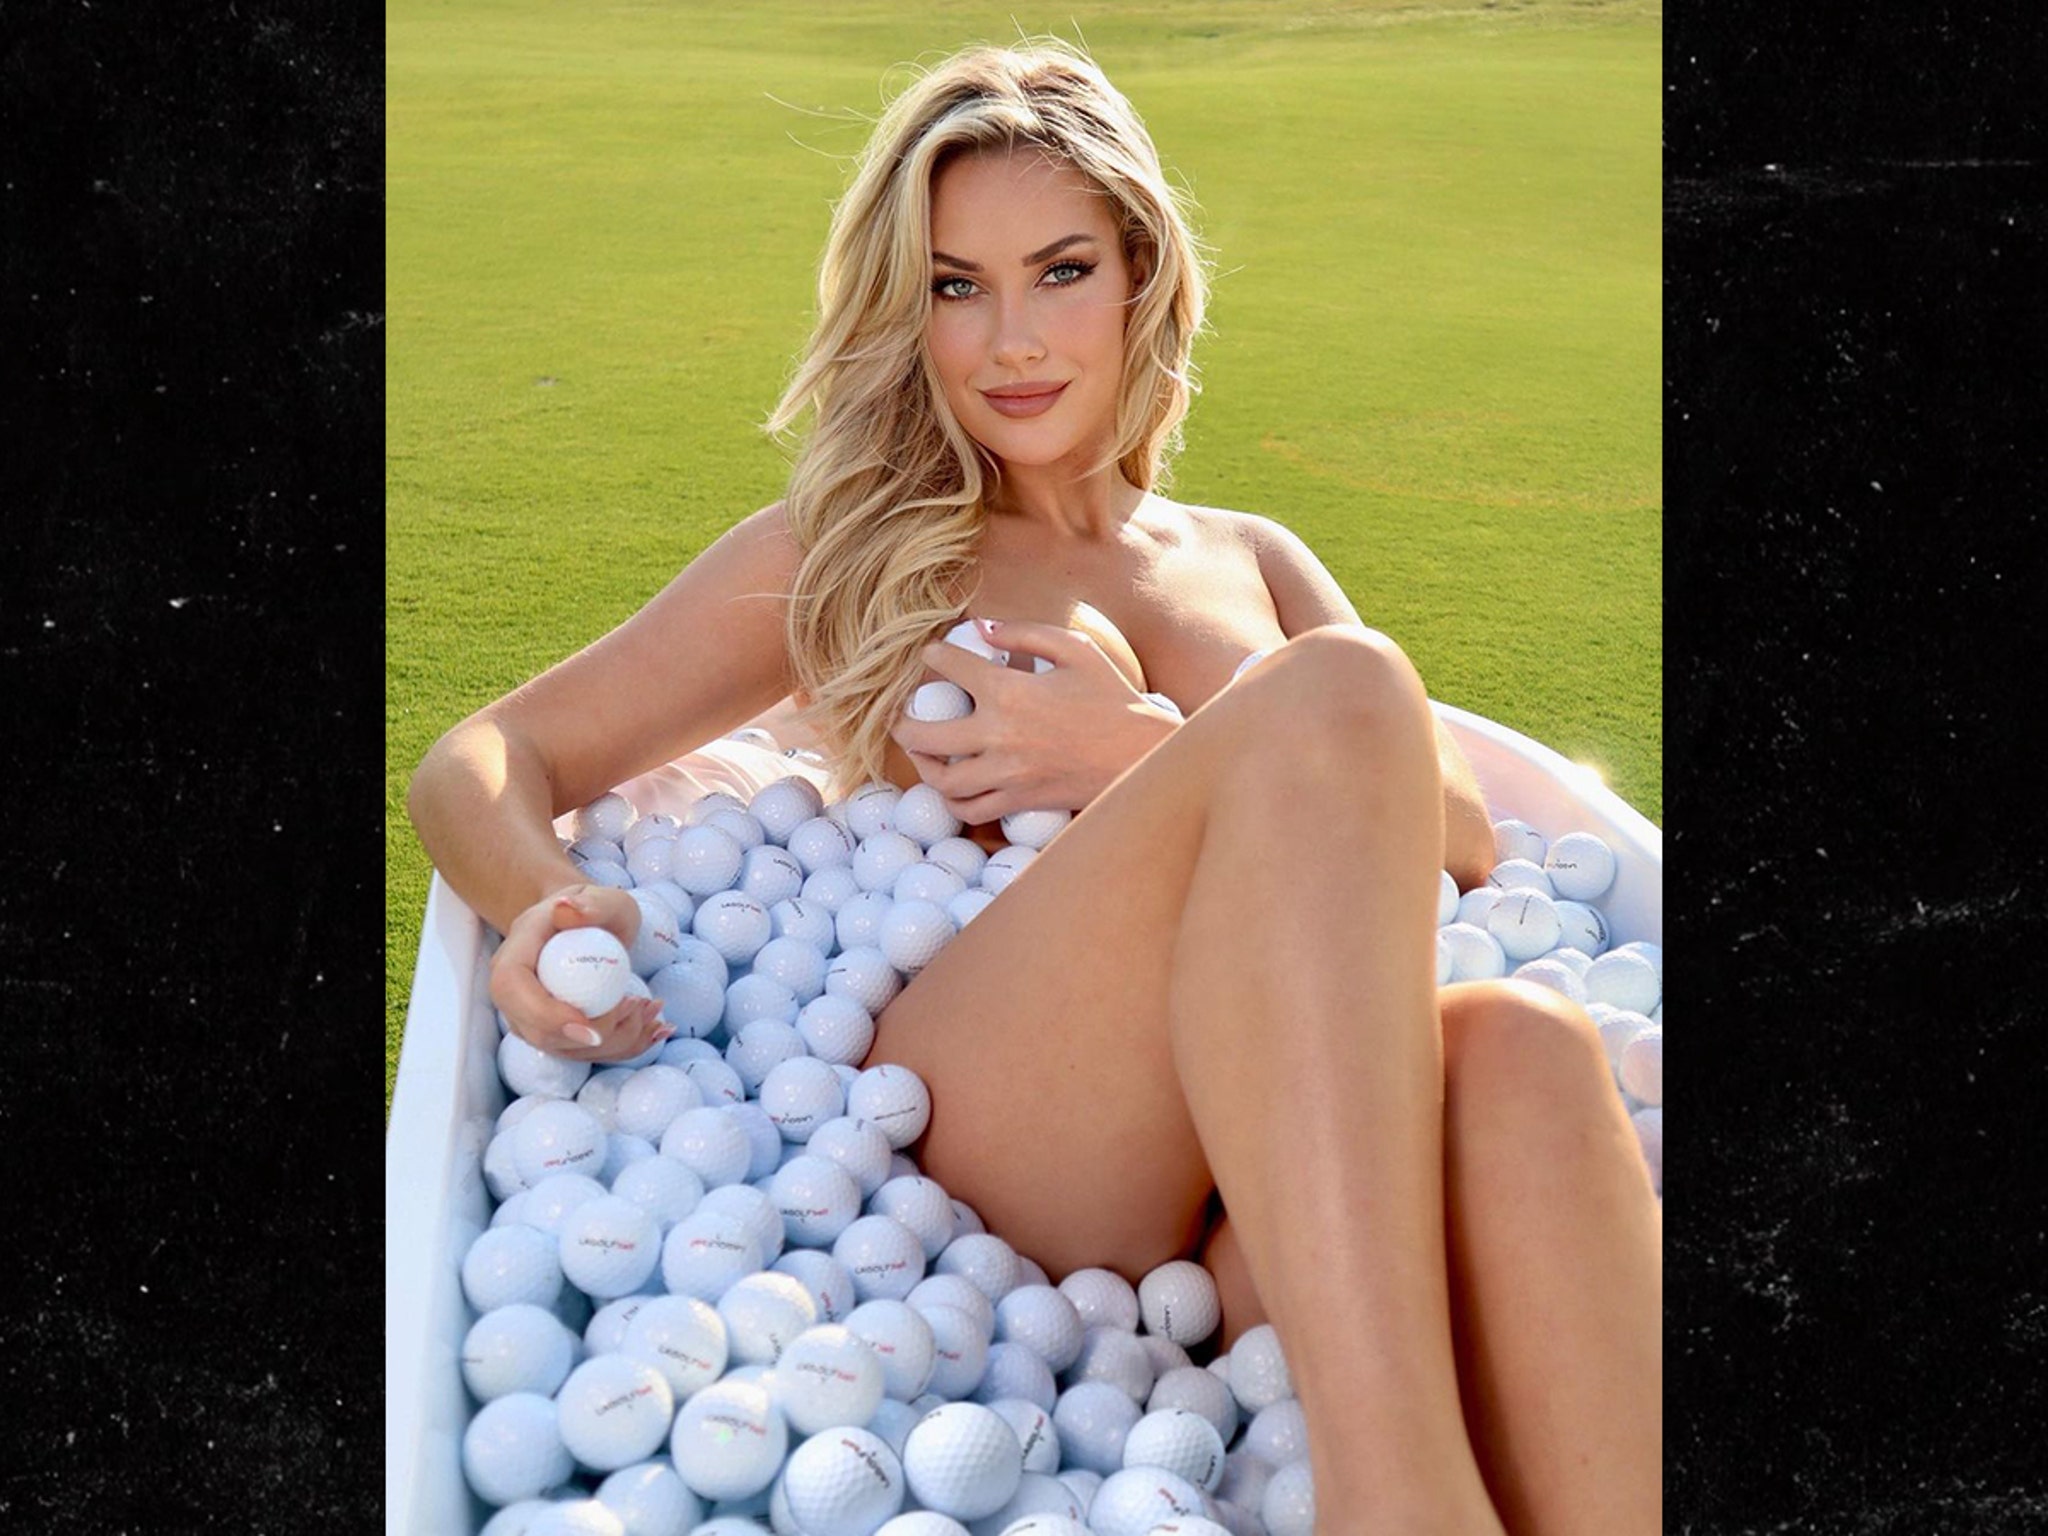 Golf Star Paige Spiranac Poses Naked In Tub Full Of Balls, Jan Stephenson Style!